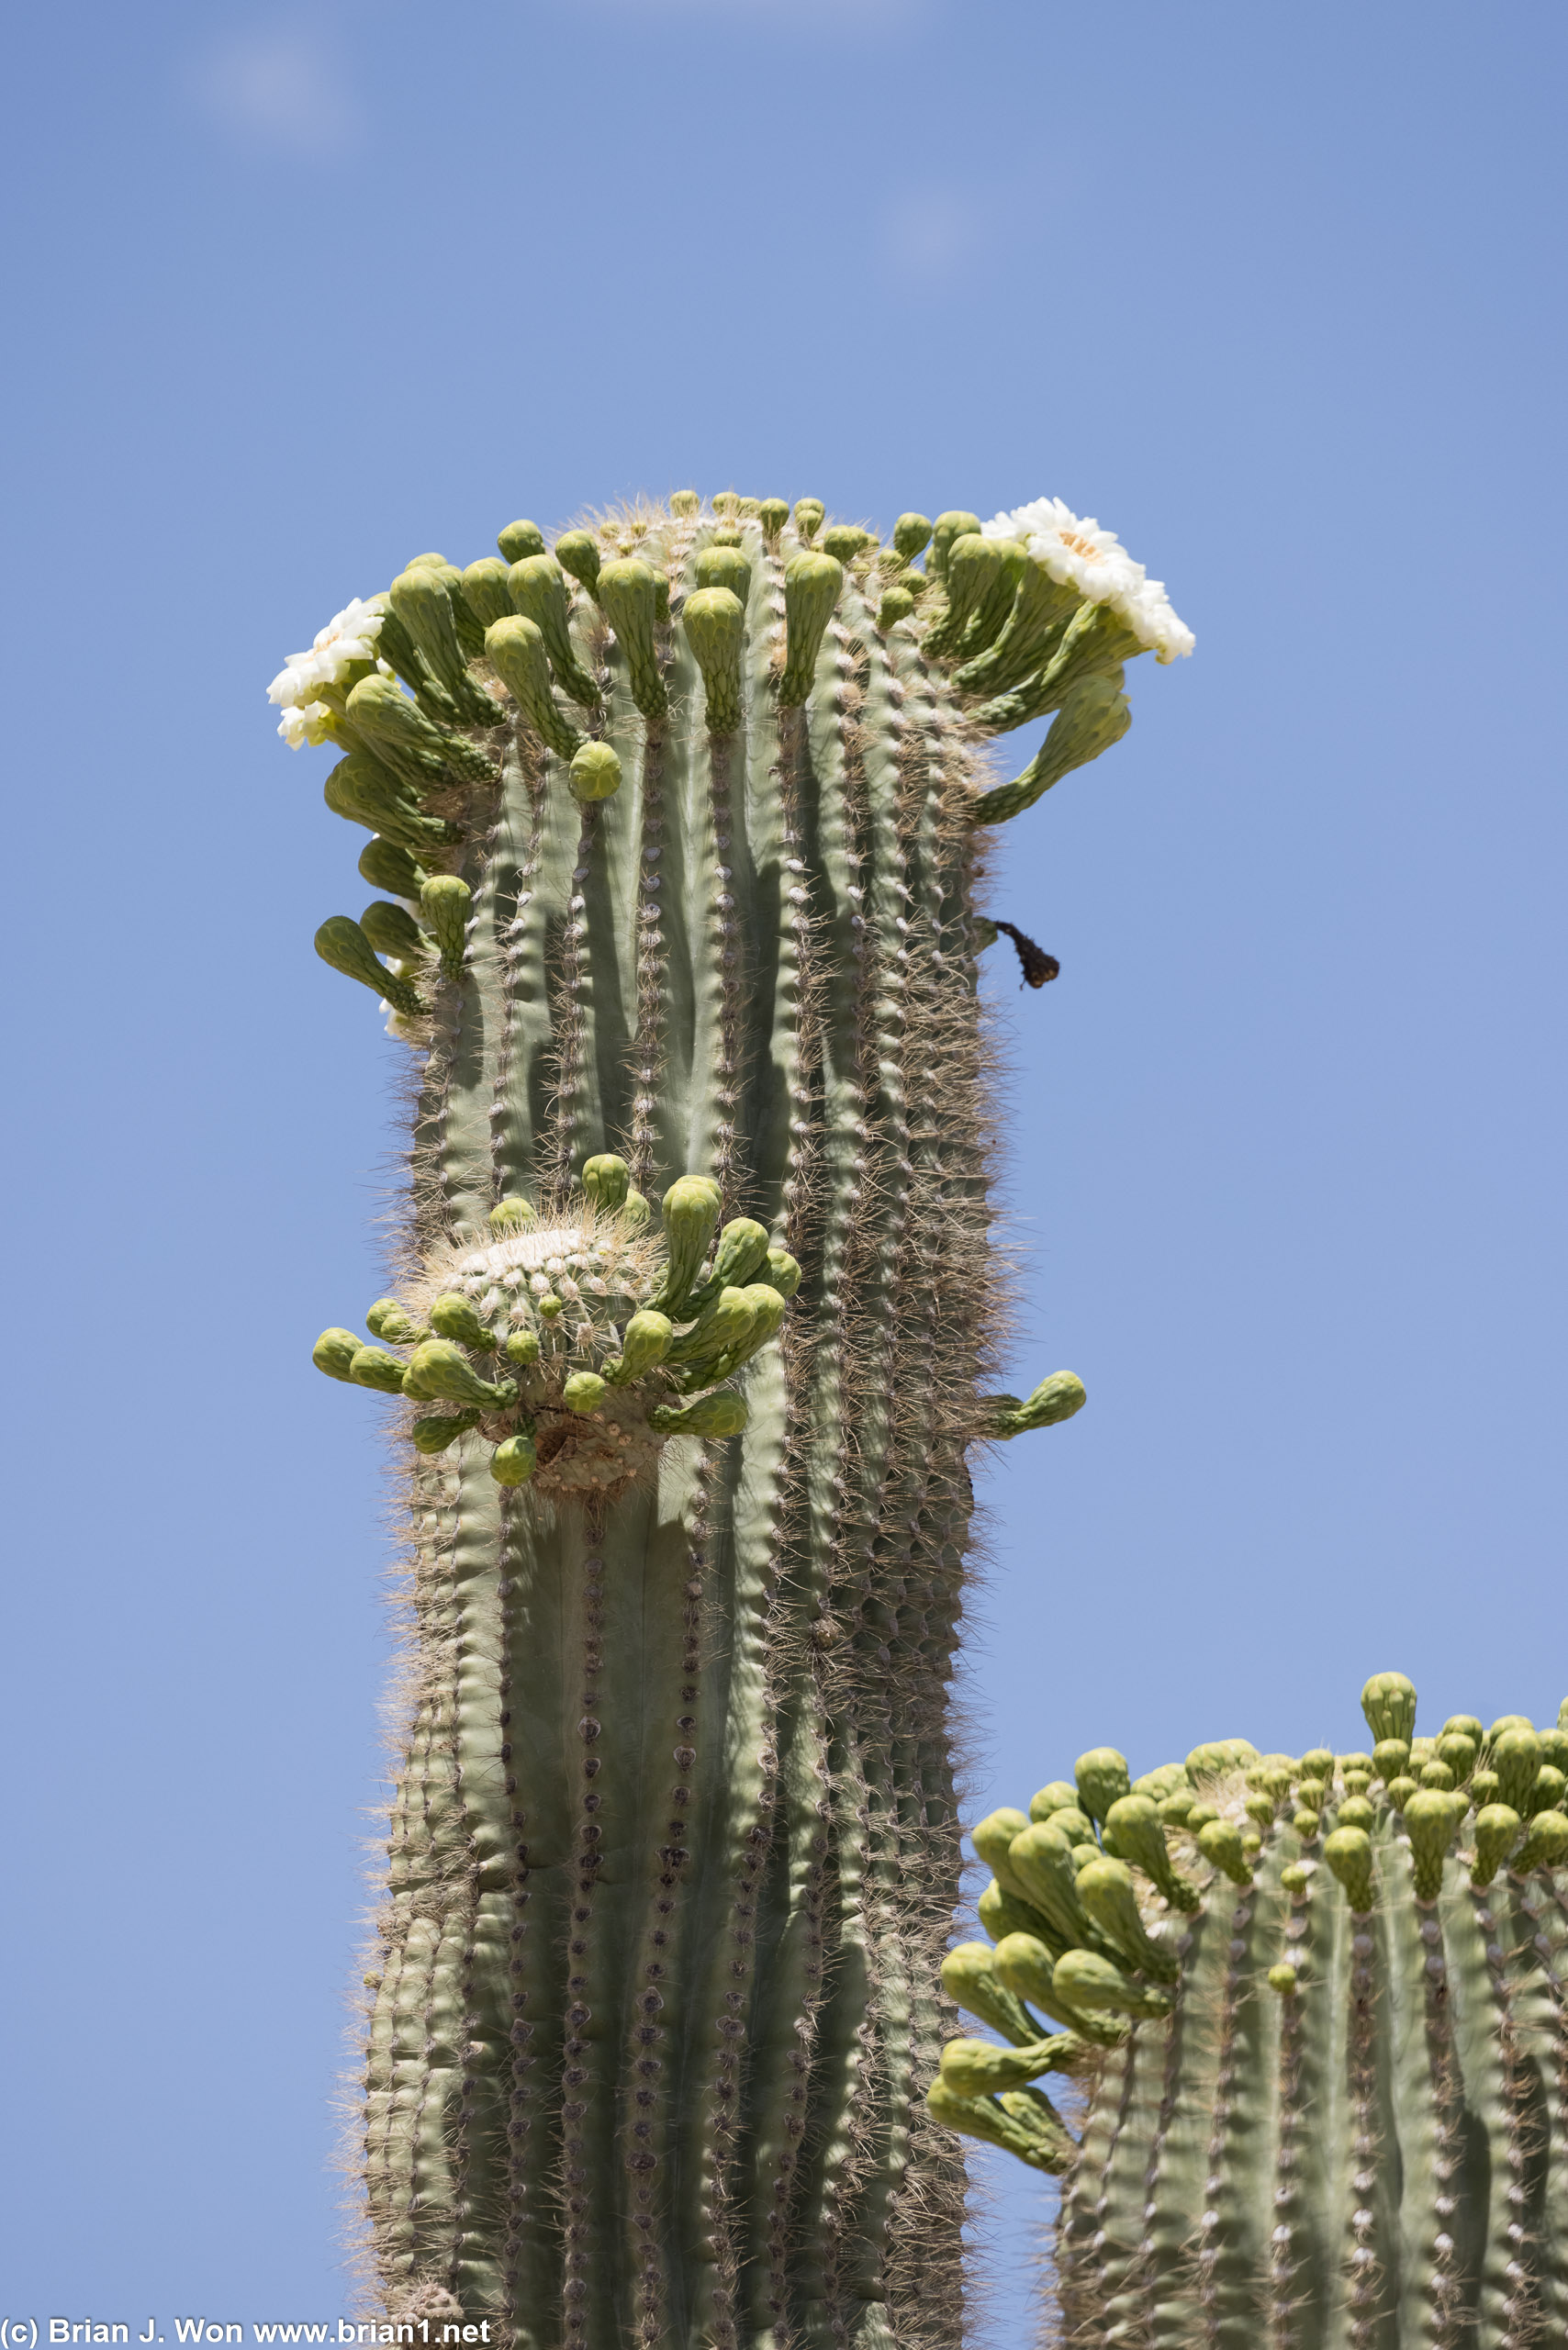 Spring rains mean cactus flowers.